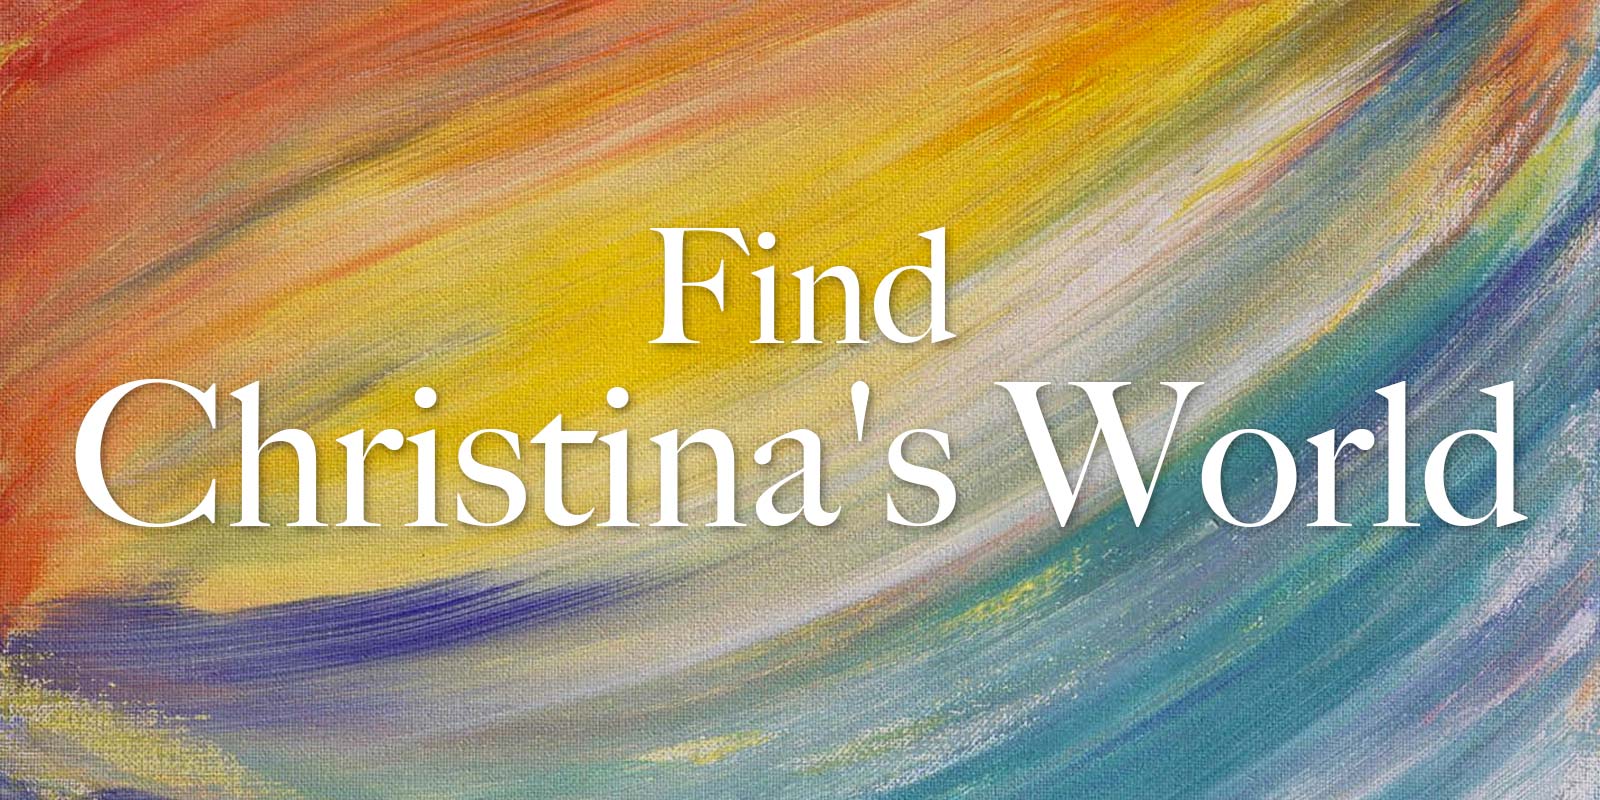 Famous Art Quiz Christinas World